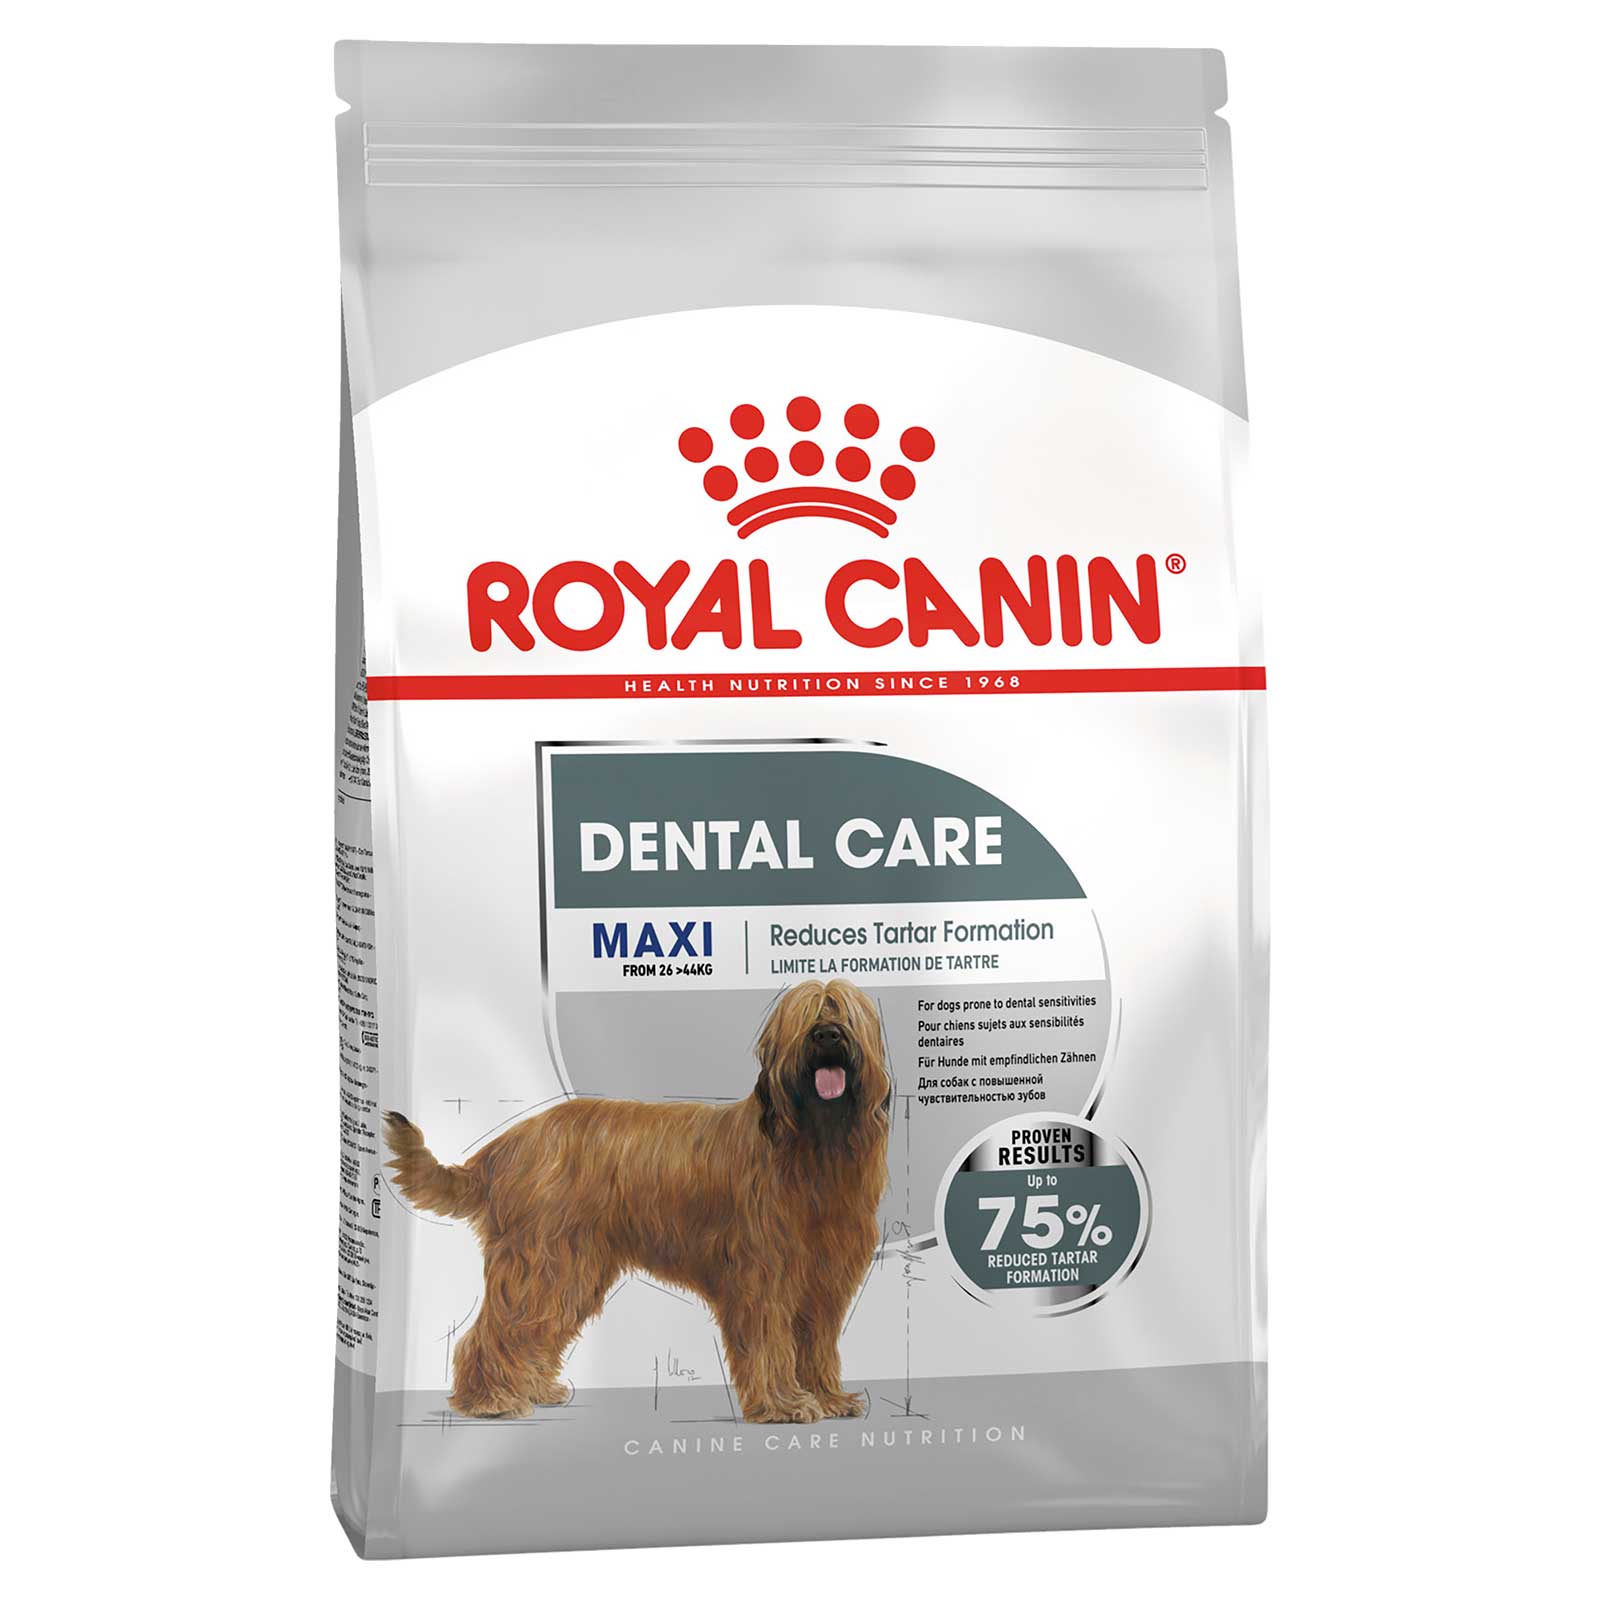 Royal Canin Dog Food Dental Care Maxi